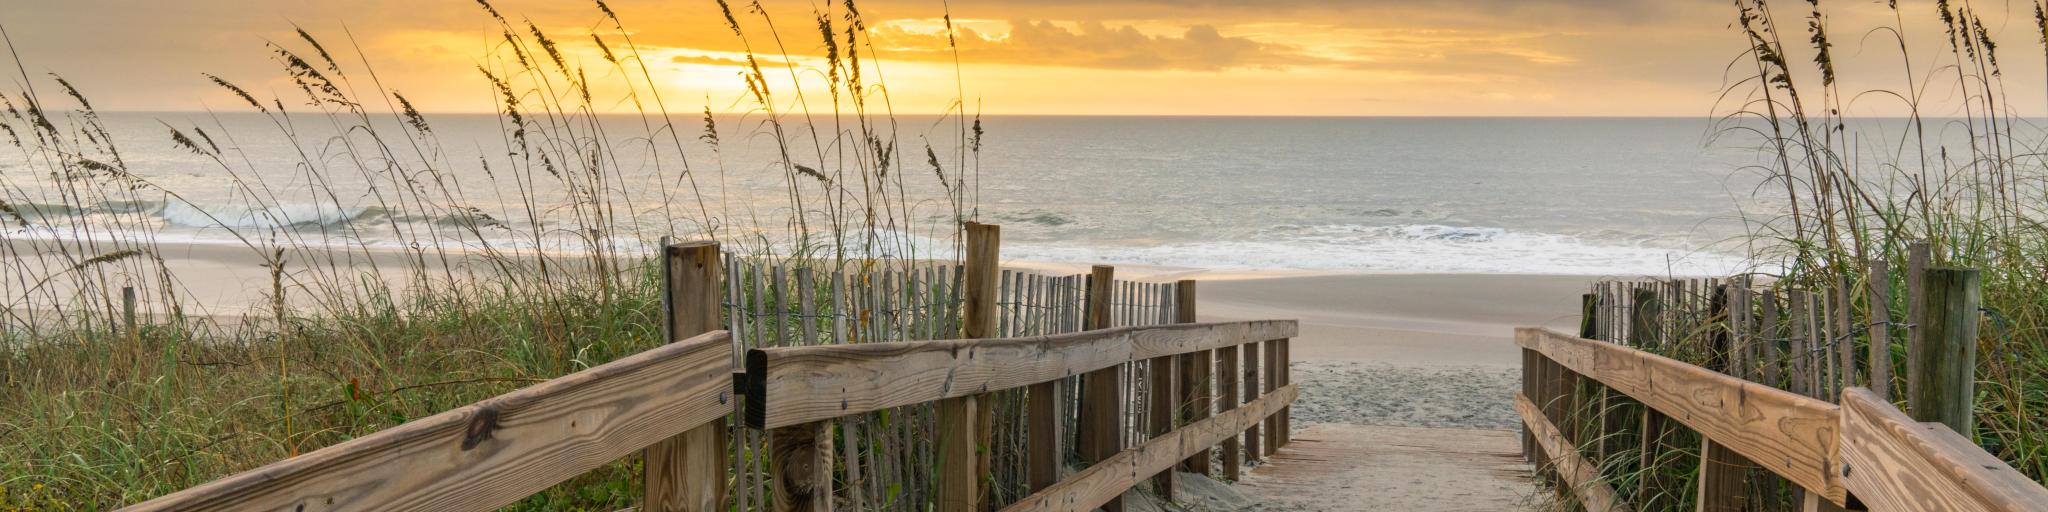 Myrtle Beach, South Carolina, USA taken at sunrise along boardwalk over a sand dune.